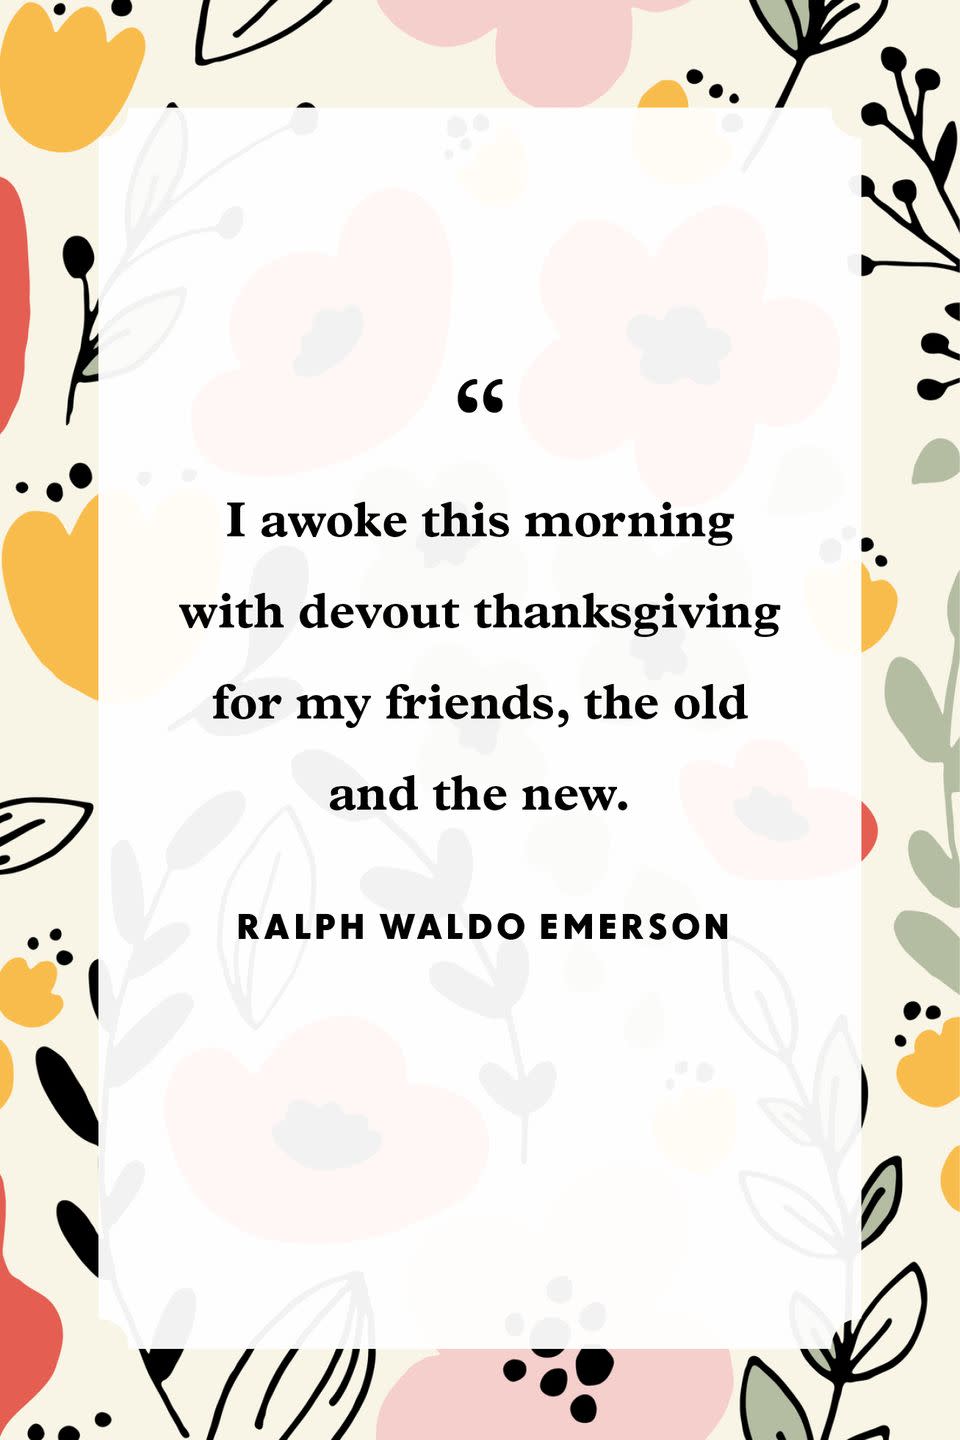 12) Ralph Waldo Emerson